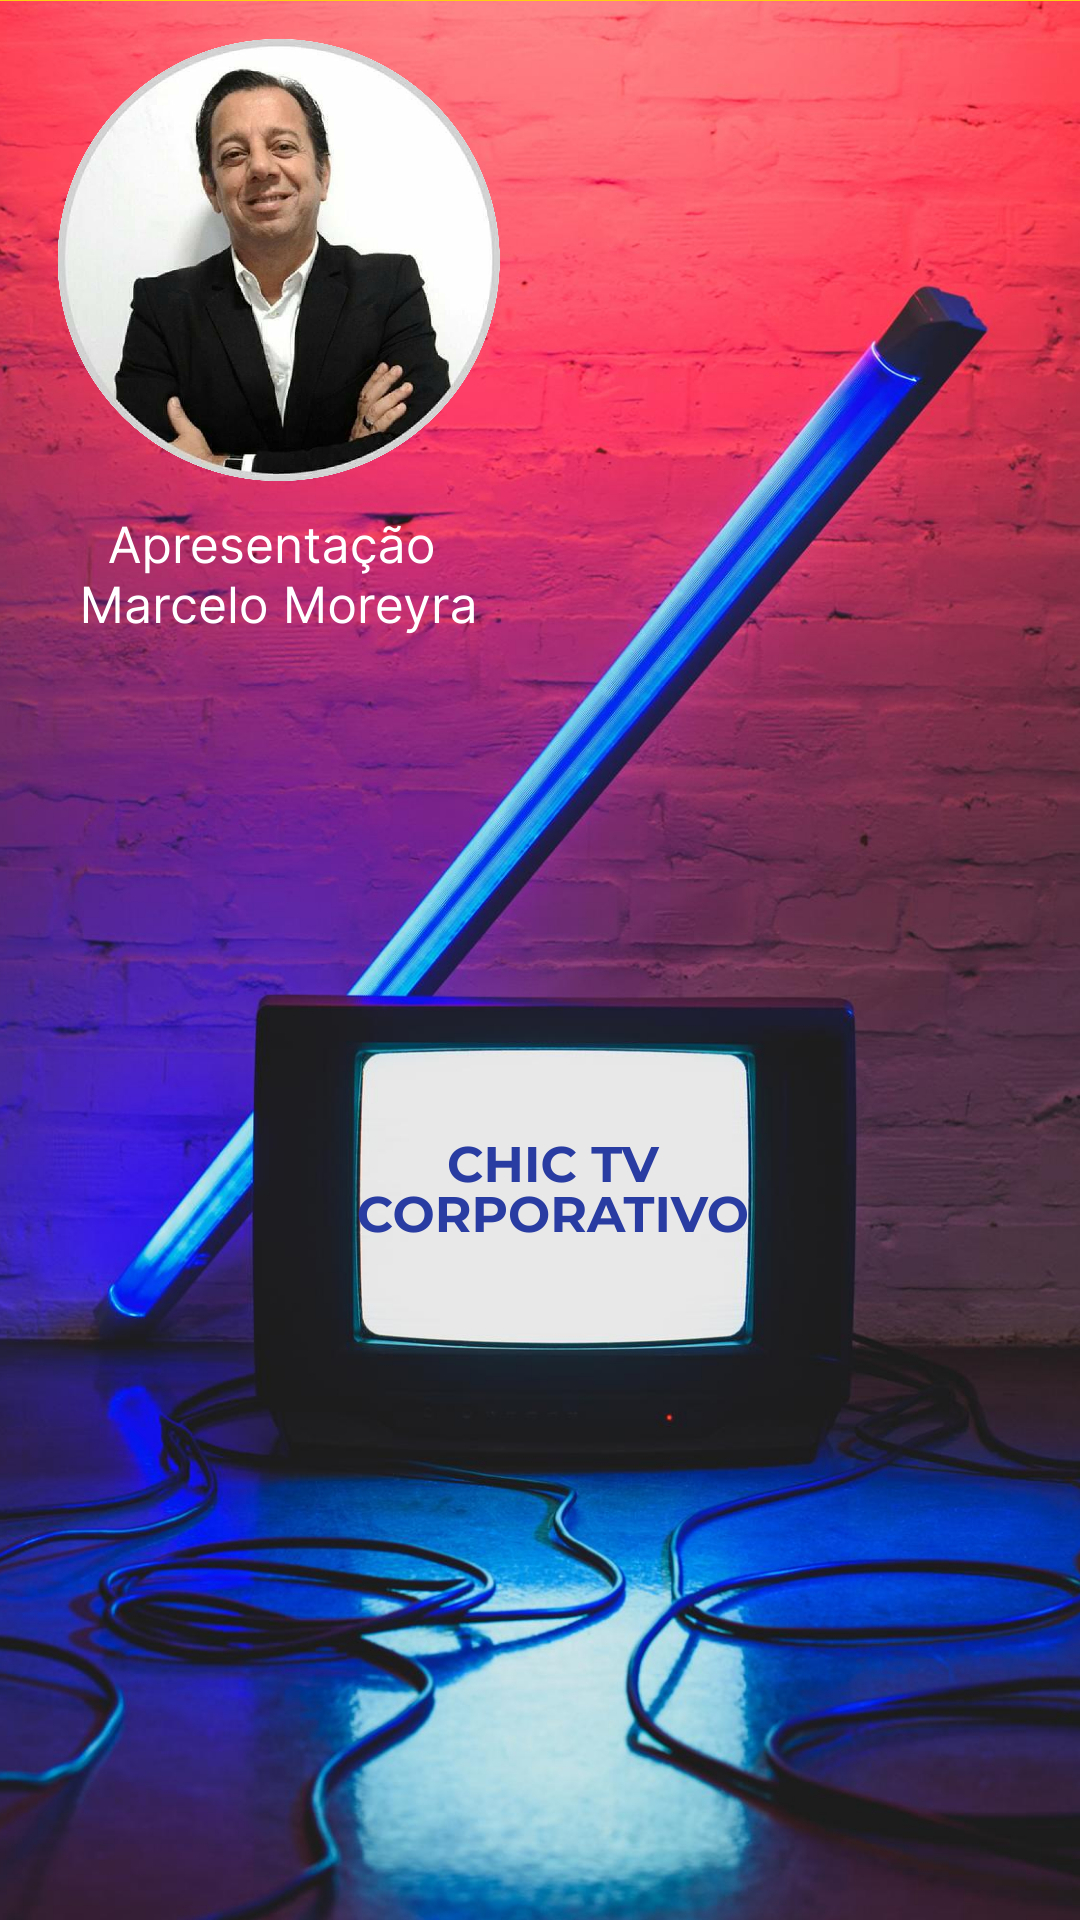 Chic TV Corporativo